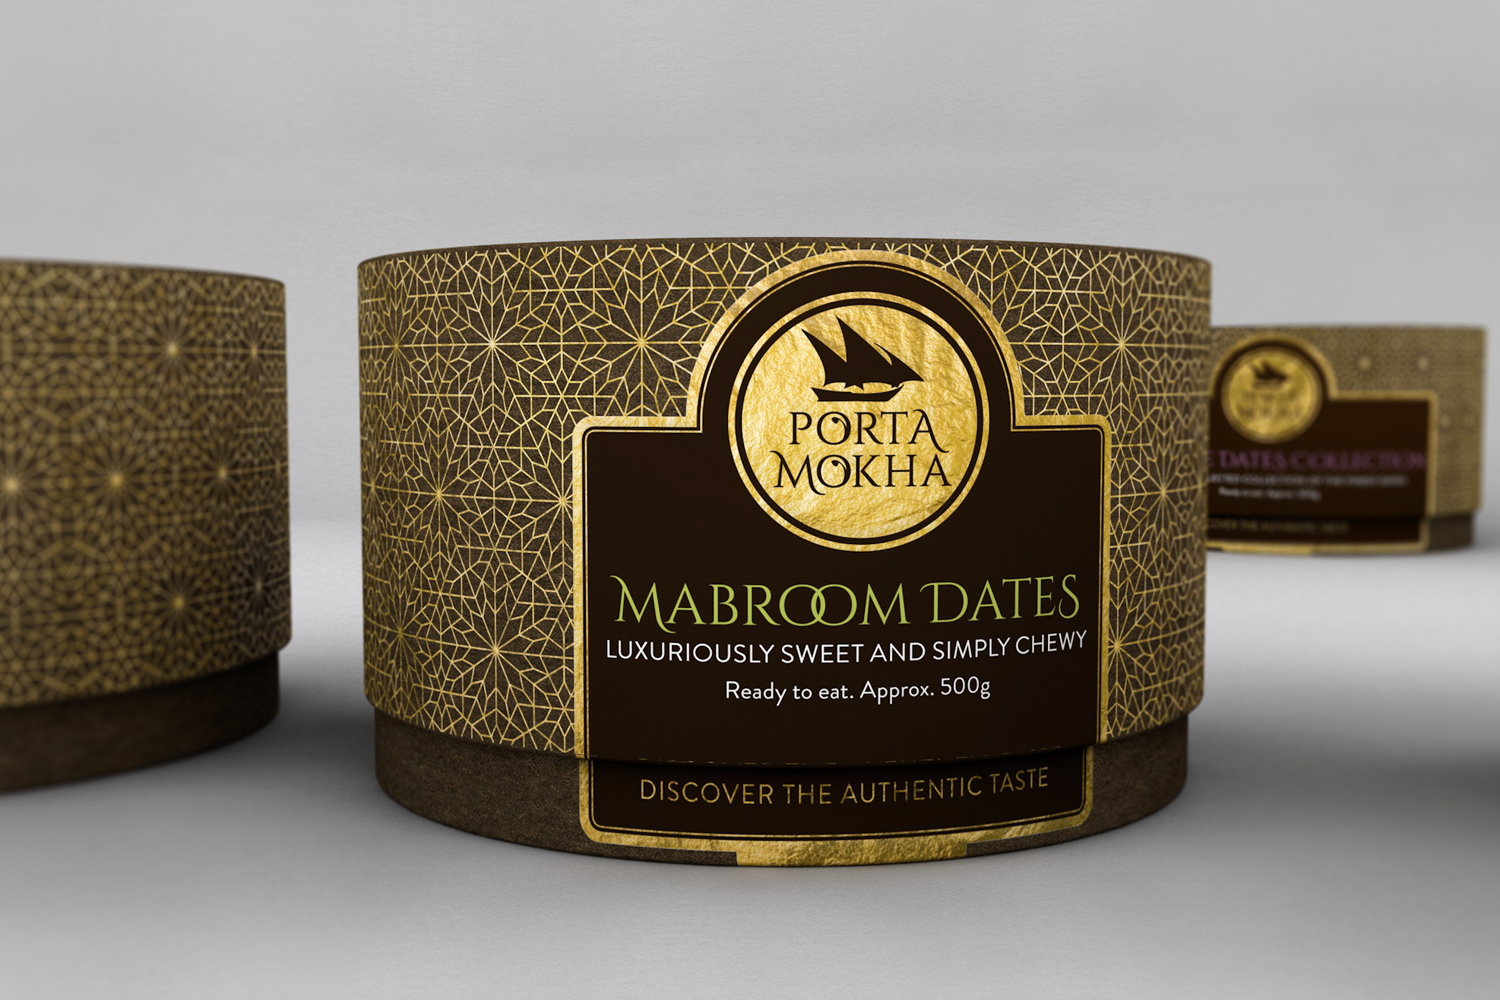 porta mokha mabroom dates packaging